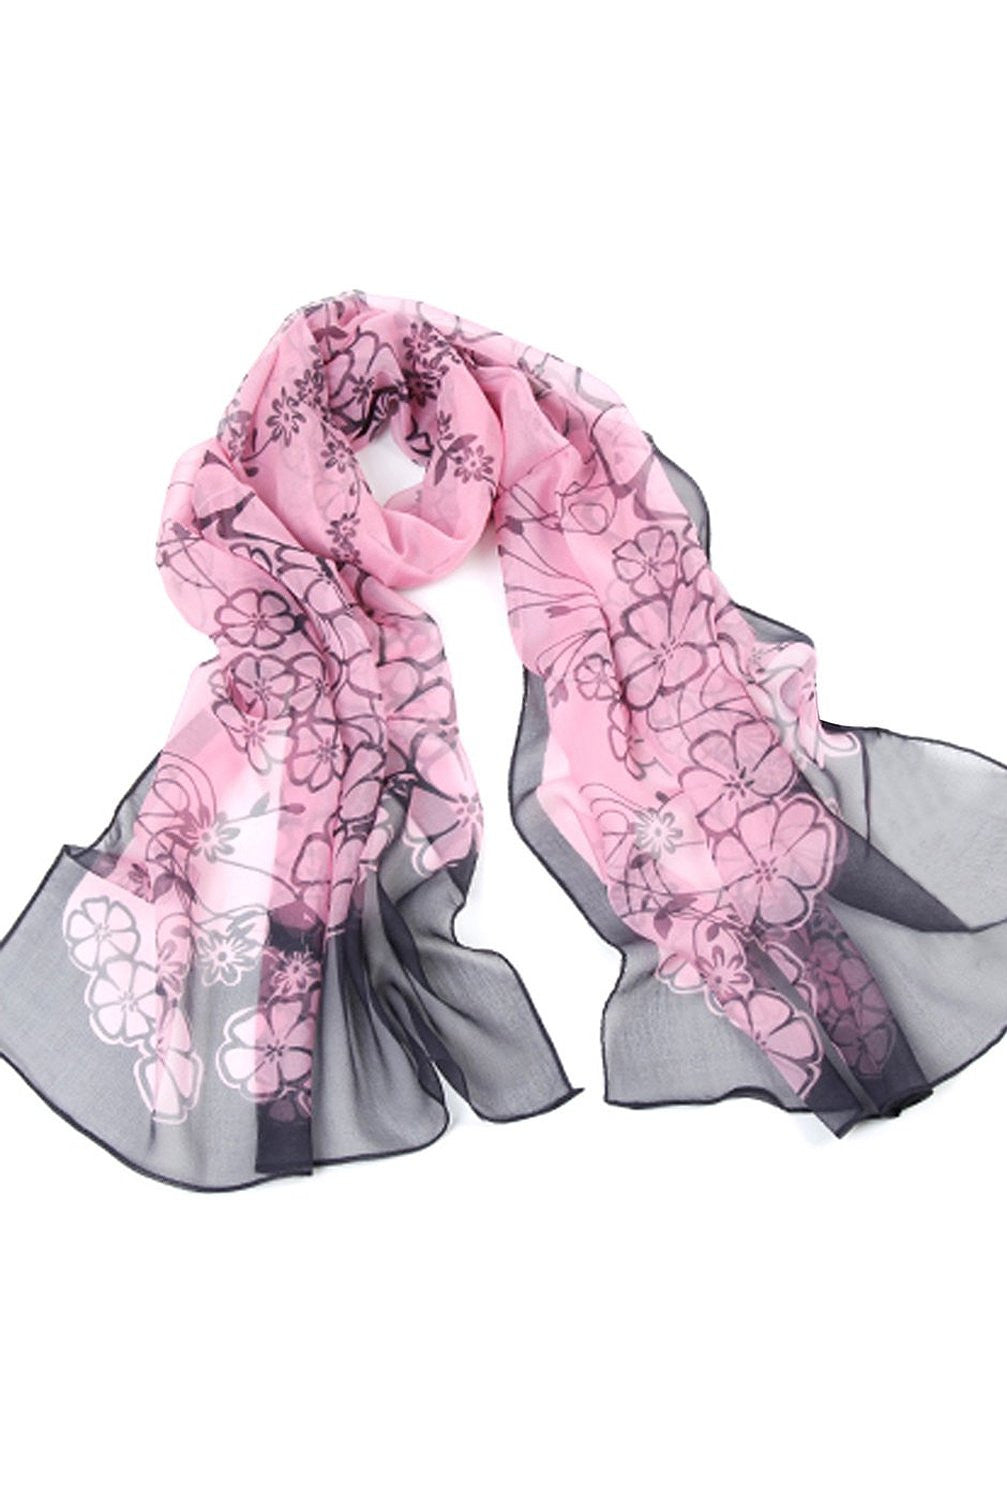 Luxury Lane Women's "Spring Blossoms" Long Sheer Silk Wrap Scarf